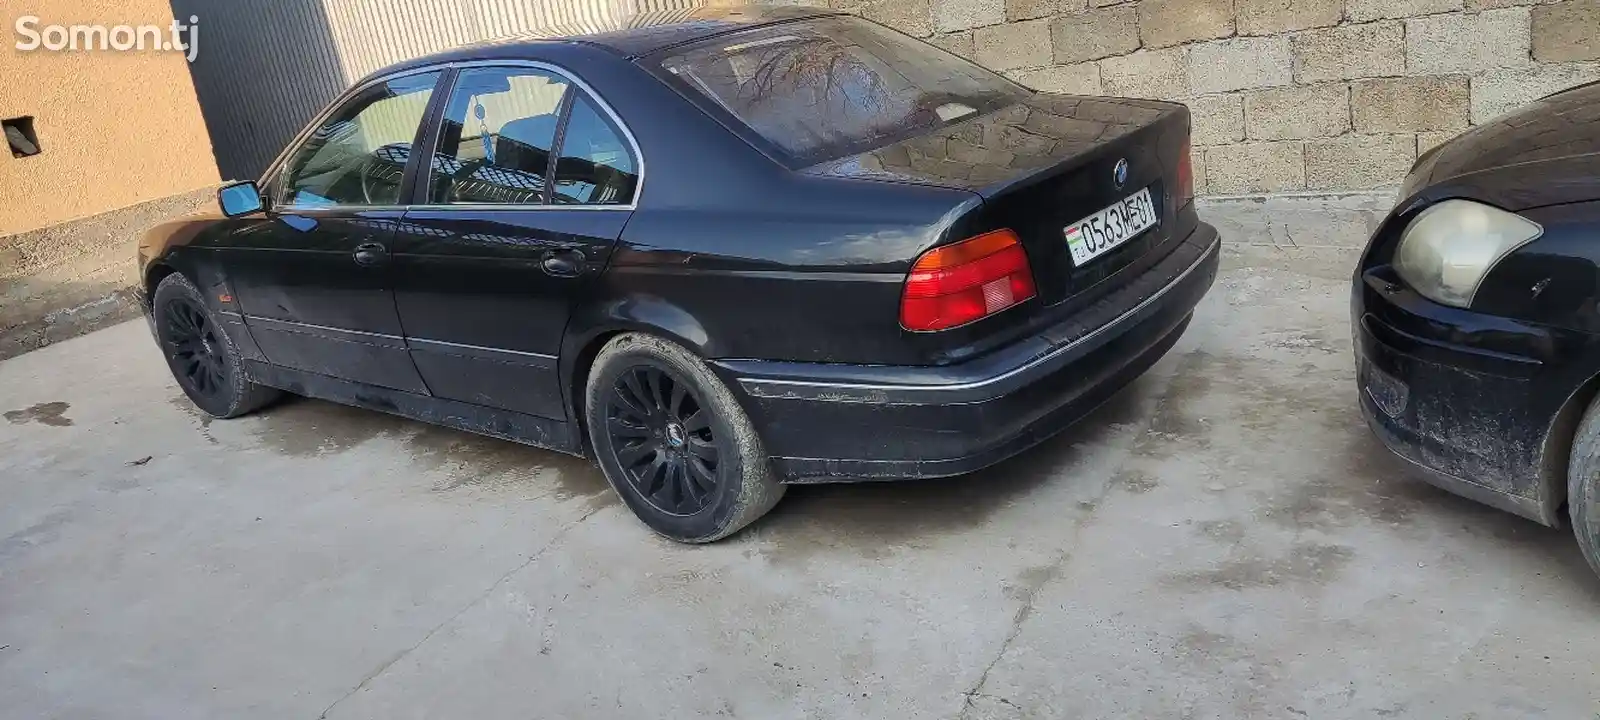 BMW 5 series, 1997-2